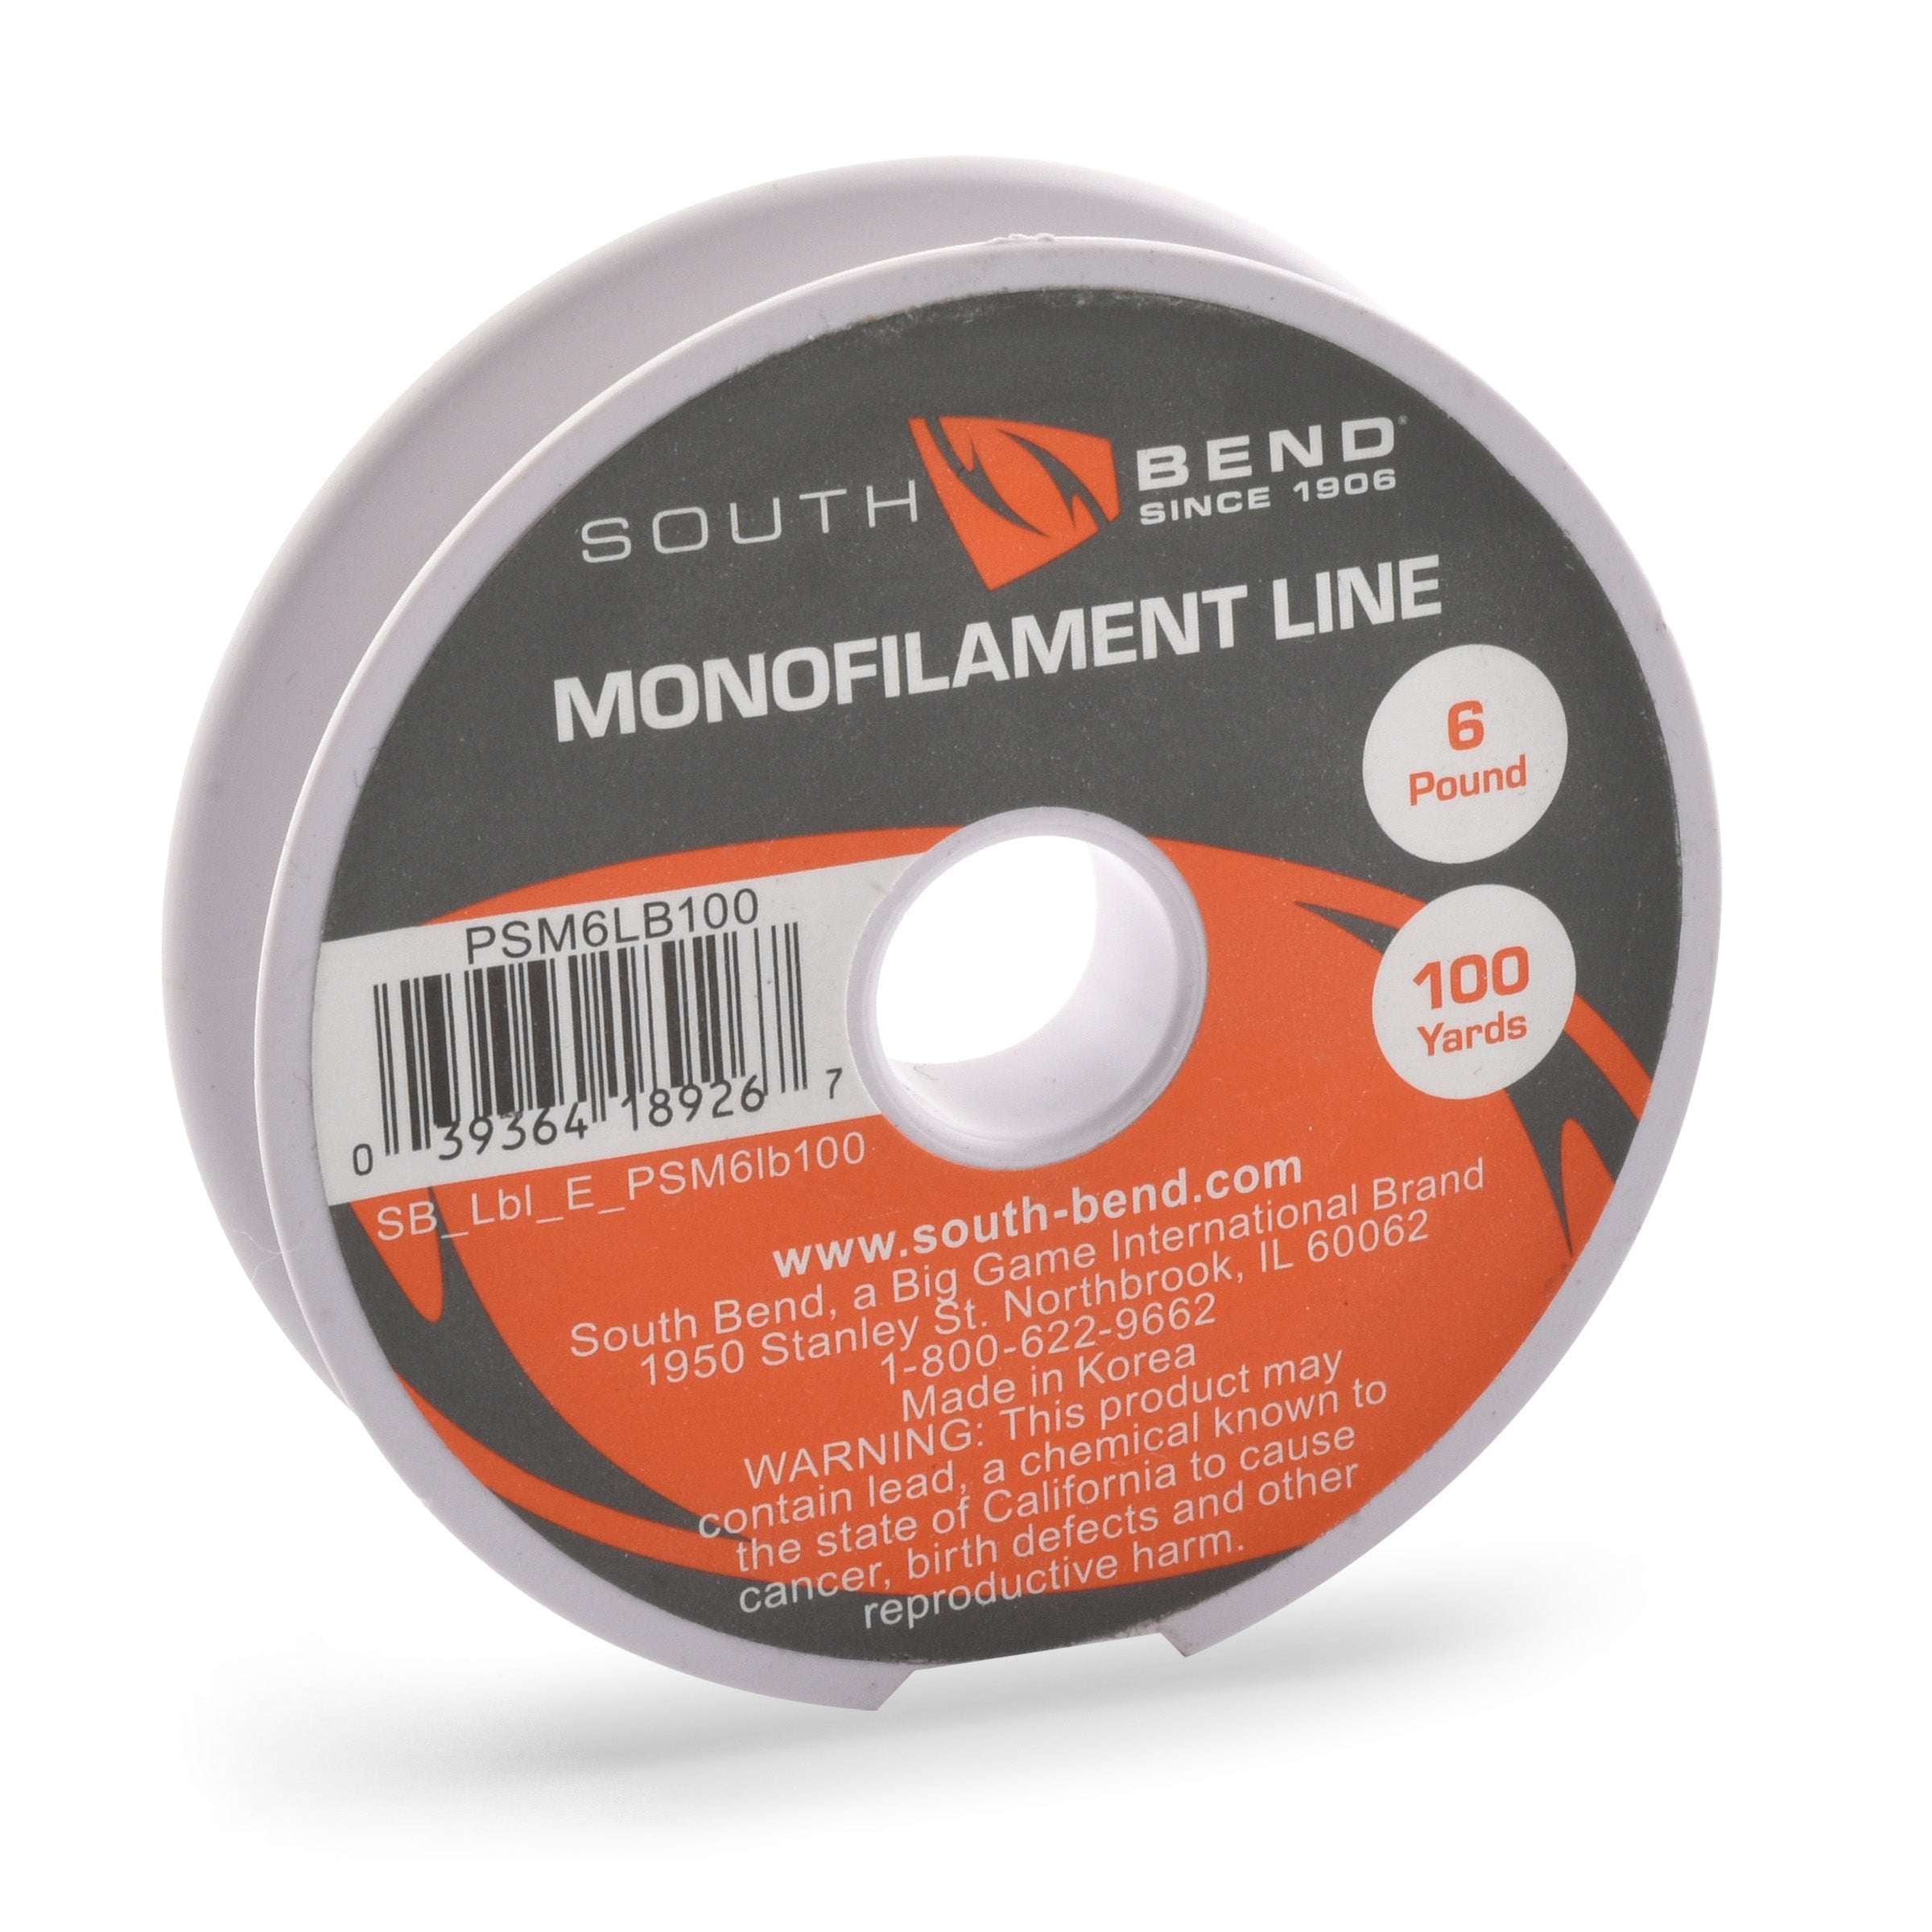 South Bend monofilament fishing line 6 lb test